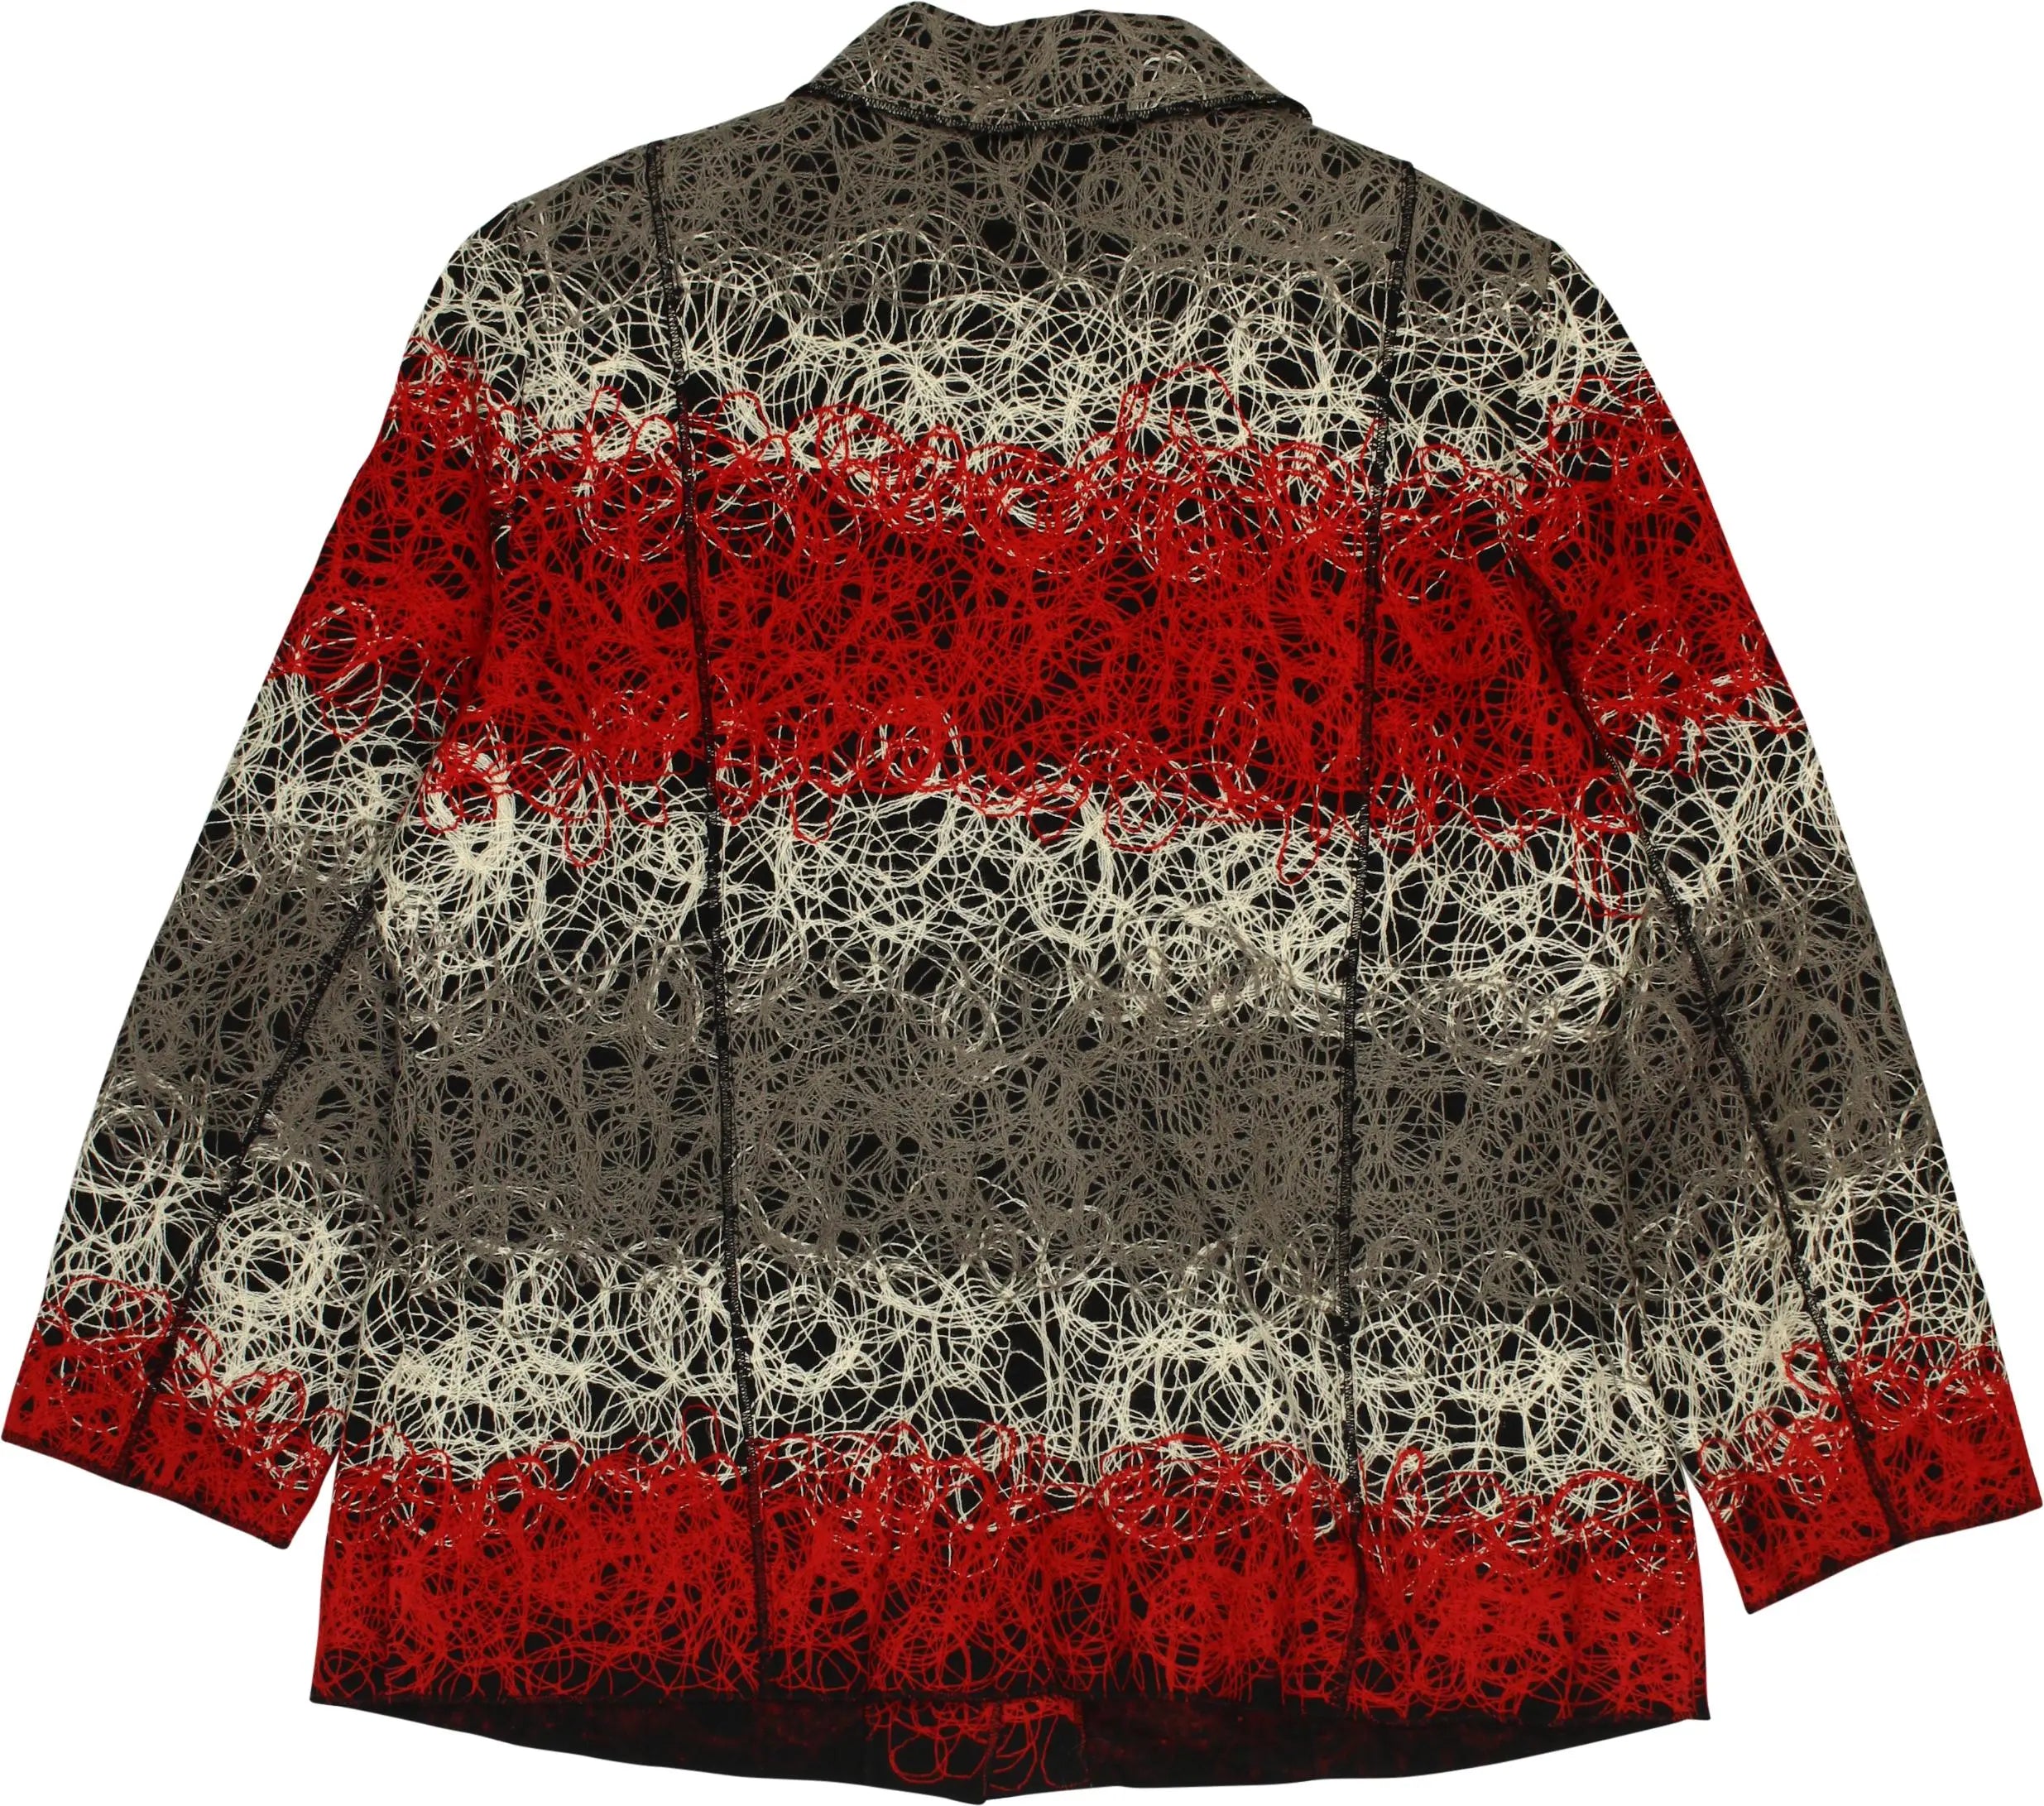 Setter - Wool Blend Jacket- ThriftTale.com - Vintage and second handclothing